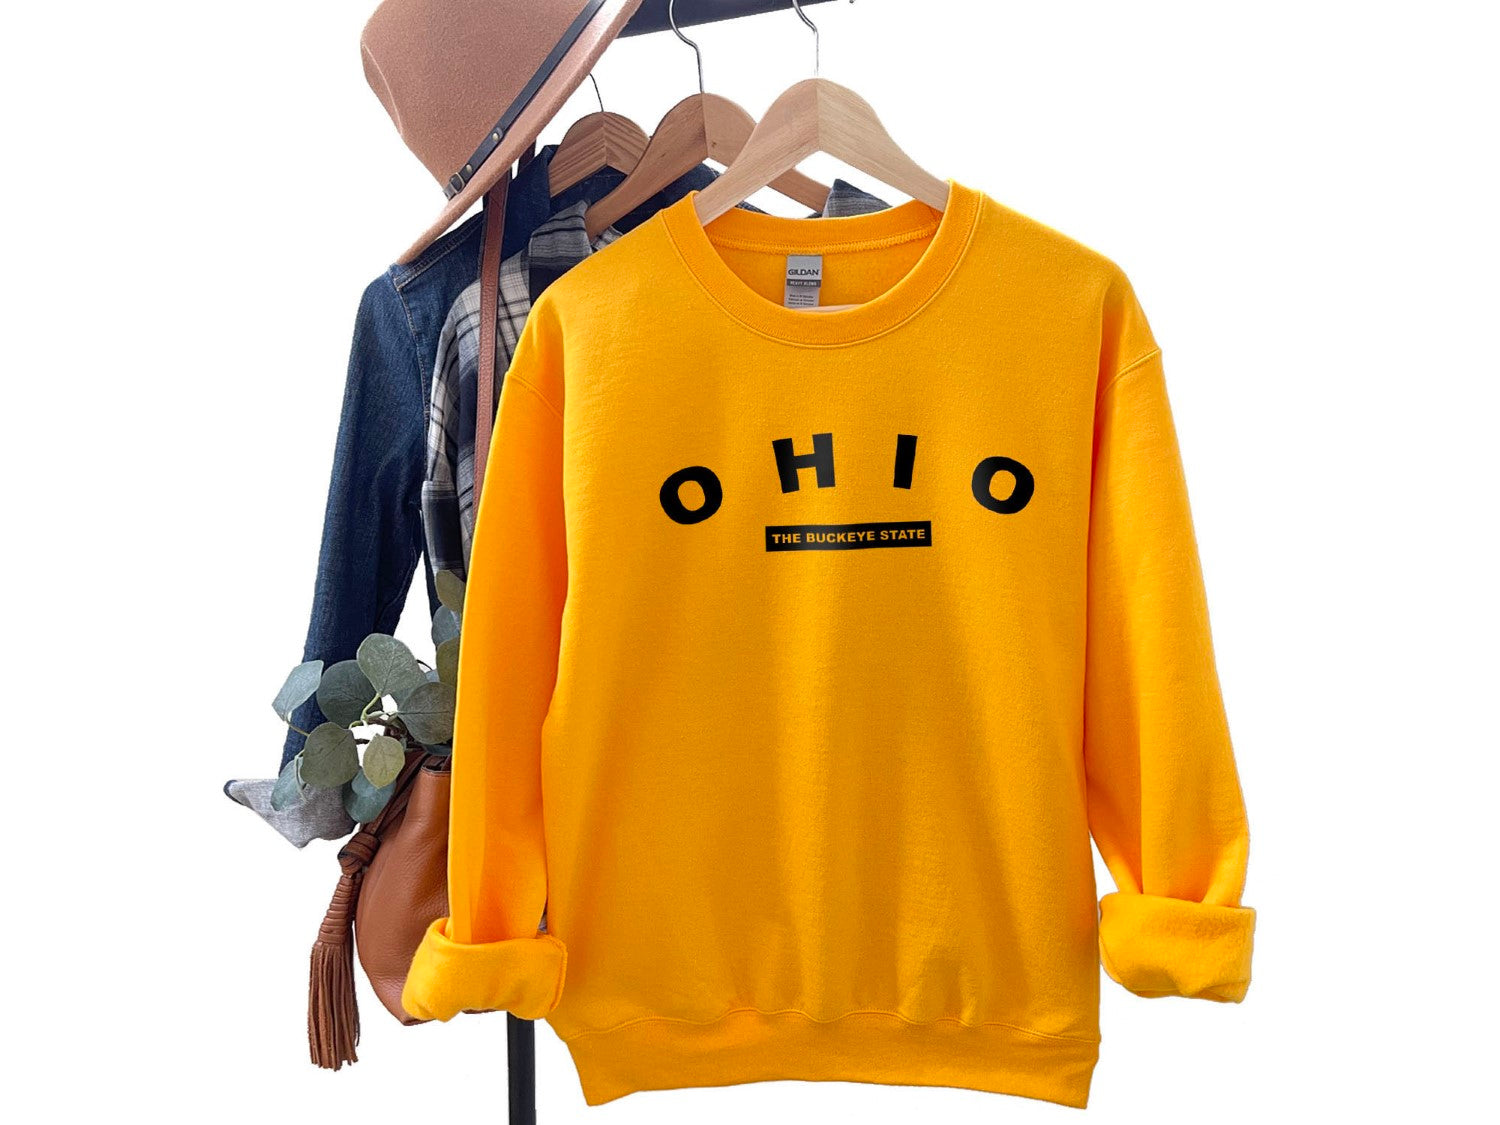 Ohio The Buckeye State Sweatshirt - United States Name & Slogan Minimal Design Printed Sweatshirt